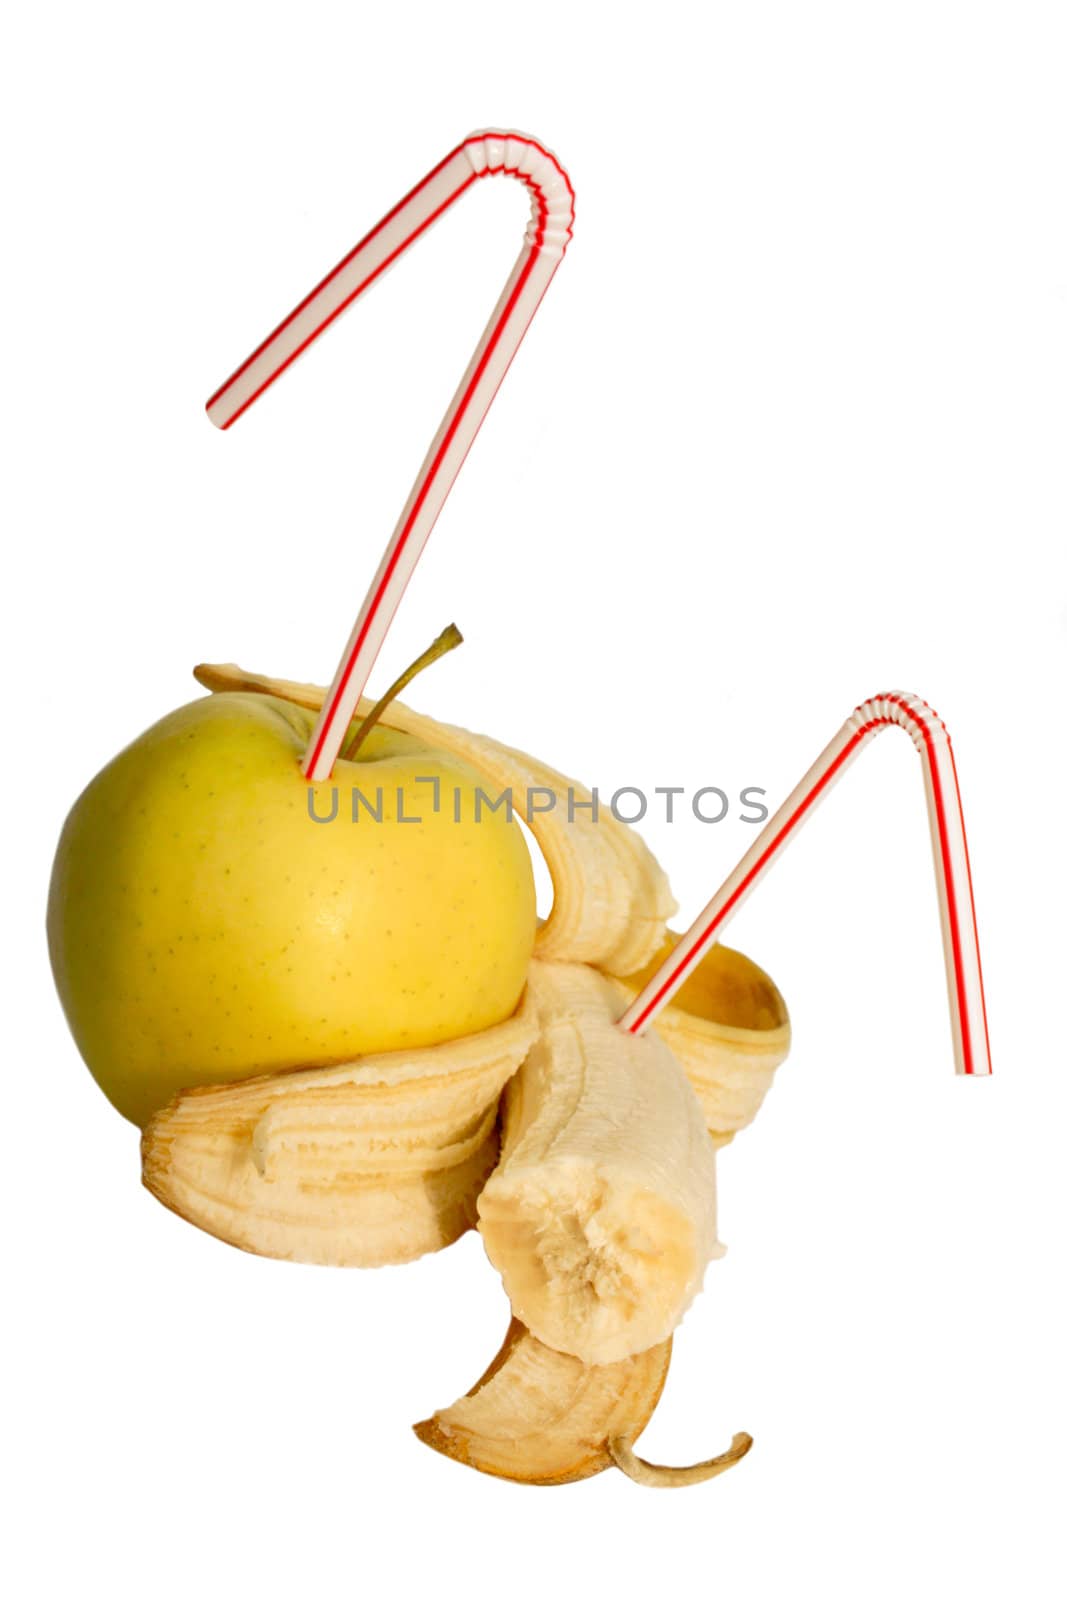 yellow, juice, fresh juice, apple juice, banana, striped tube, tube for the juice through a straw to drink juice, fruit juice, fresh nectar